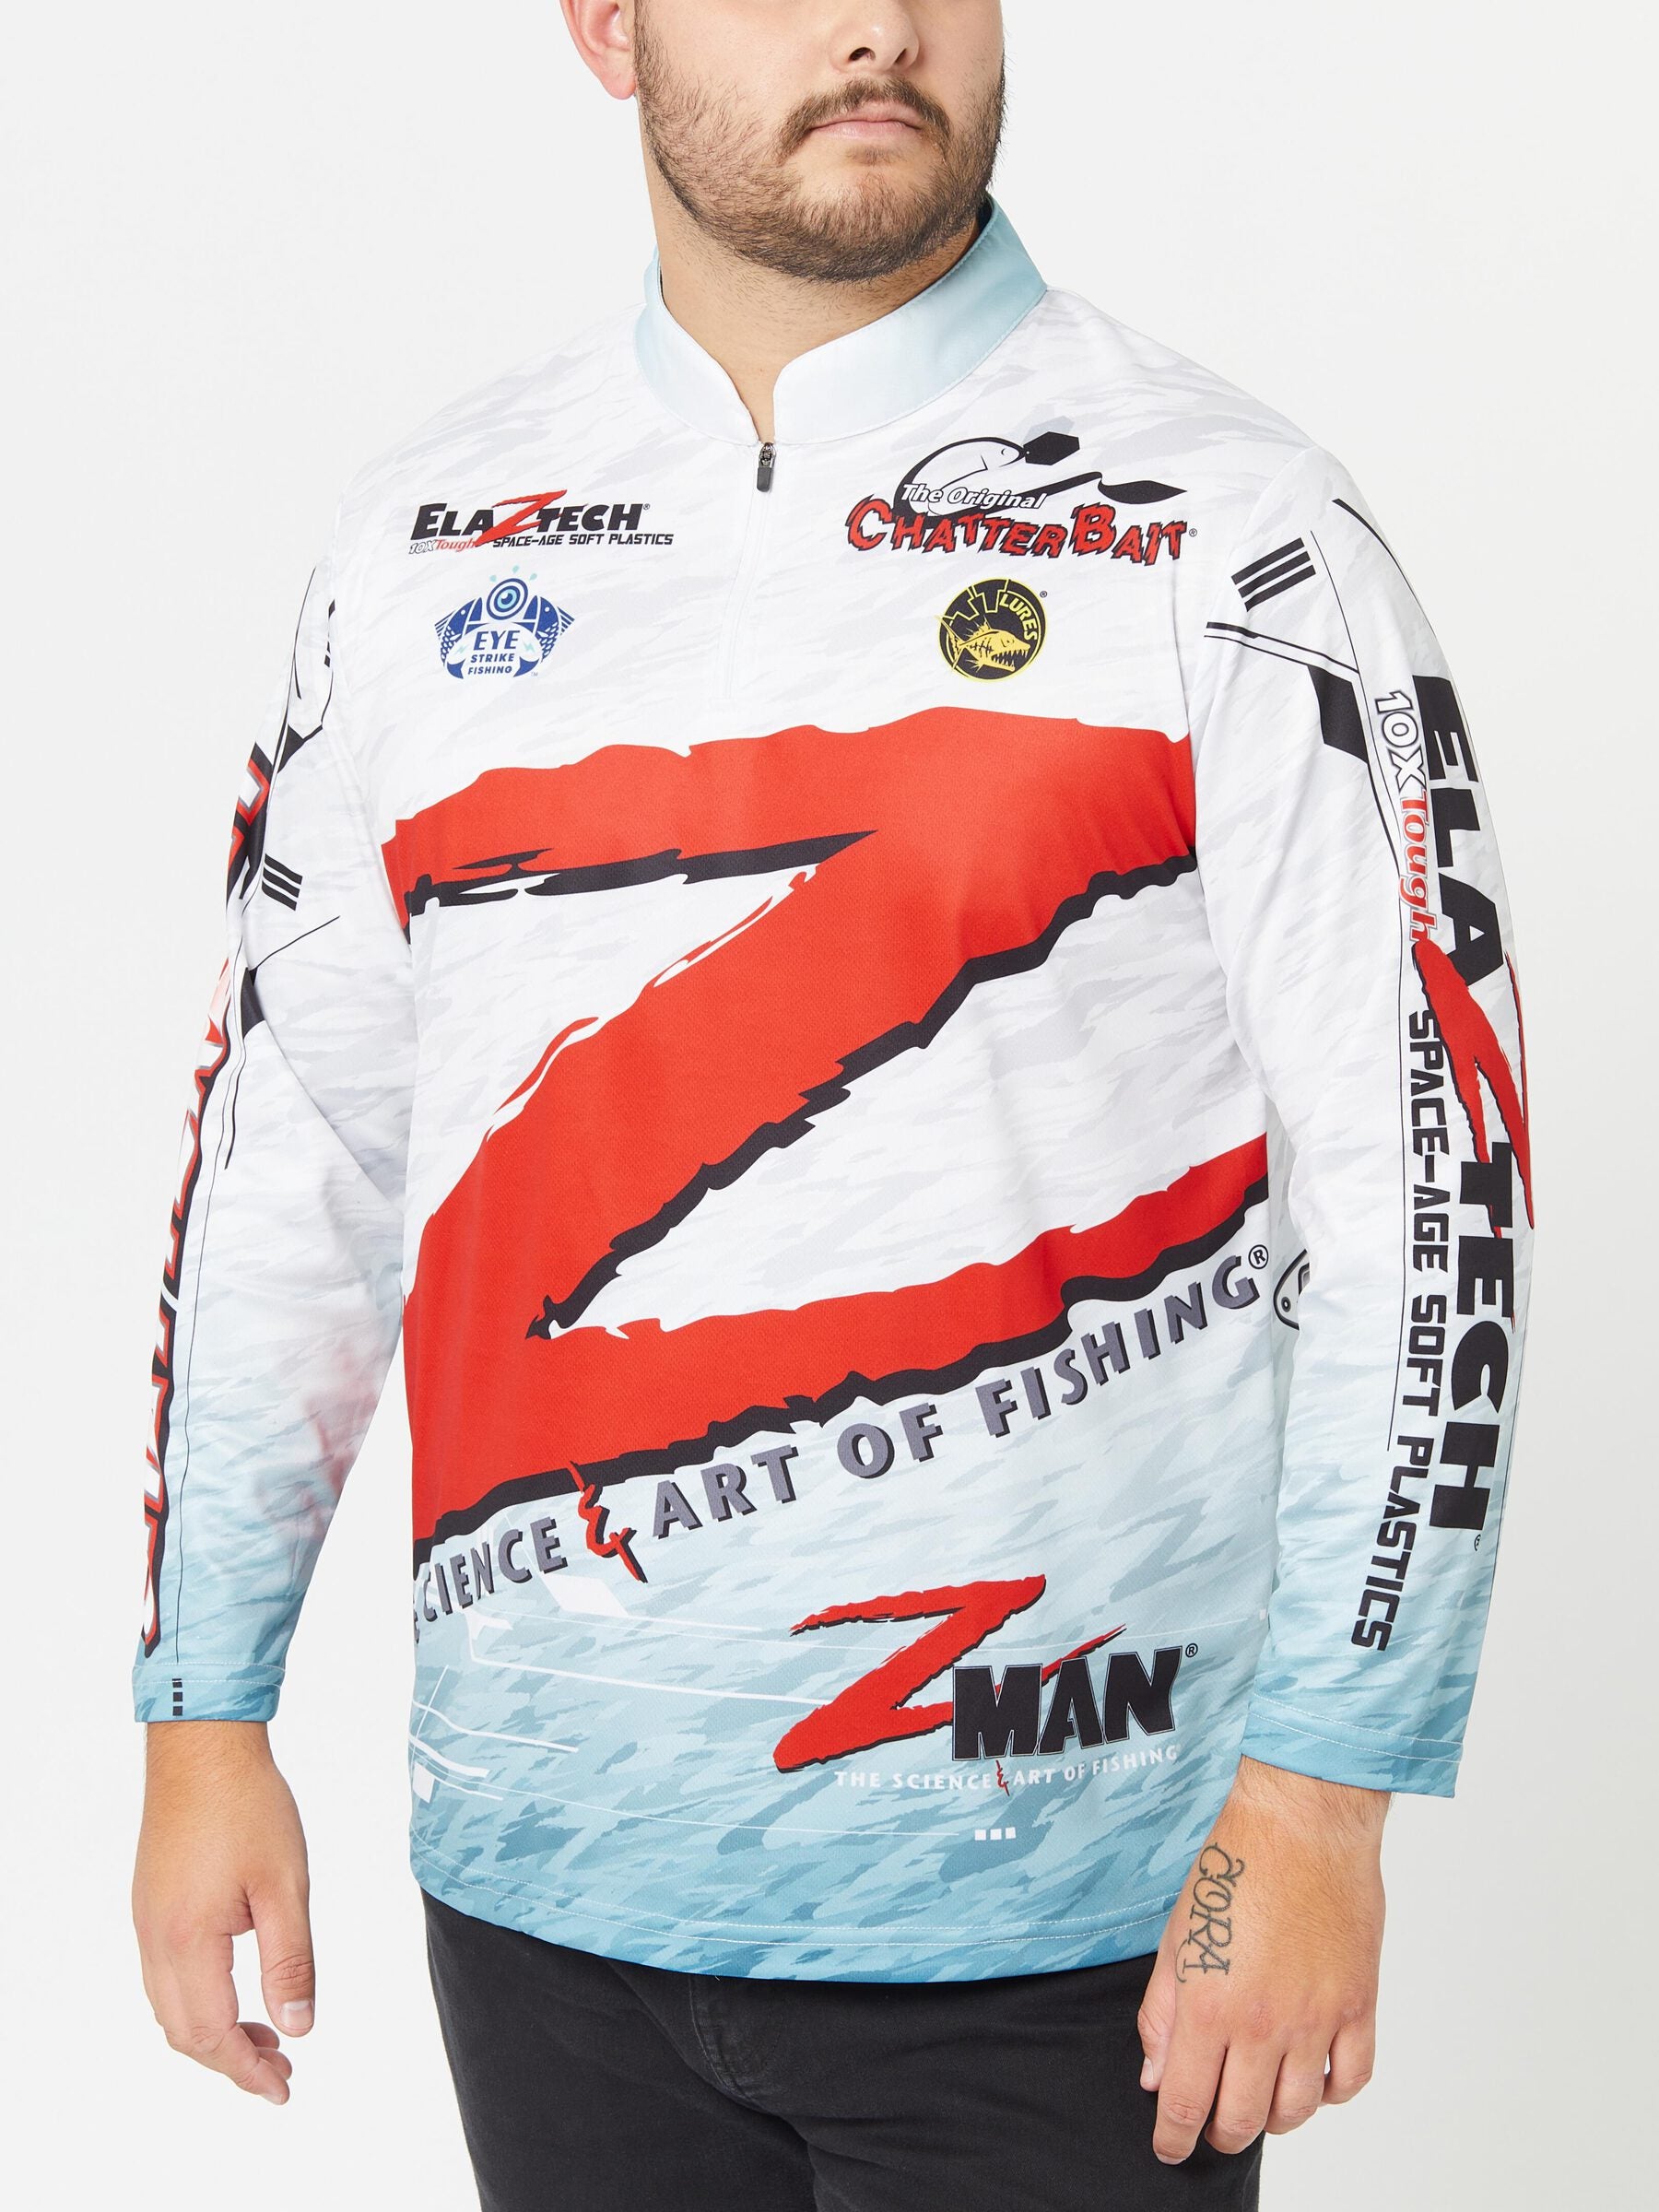 Z-Man Tournament Fishing Jersey Pro Zman Bassmaster Tournament Jersey Shirt 